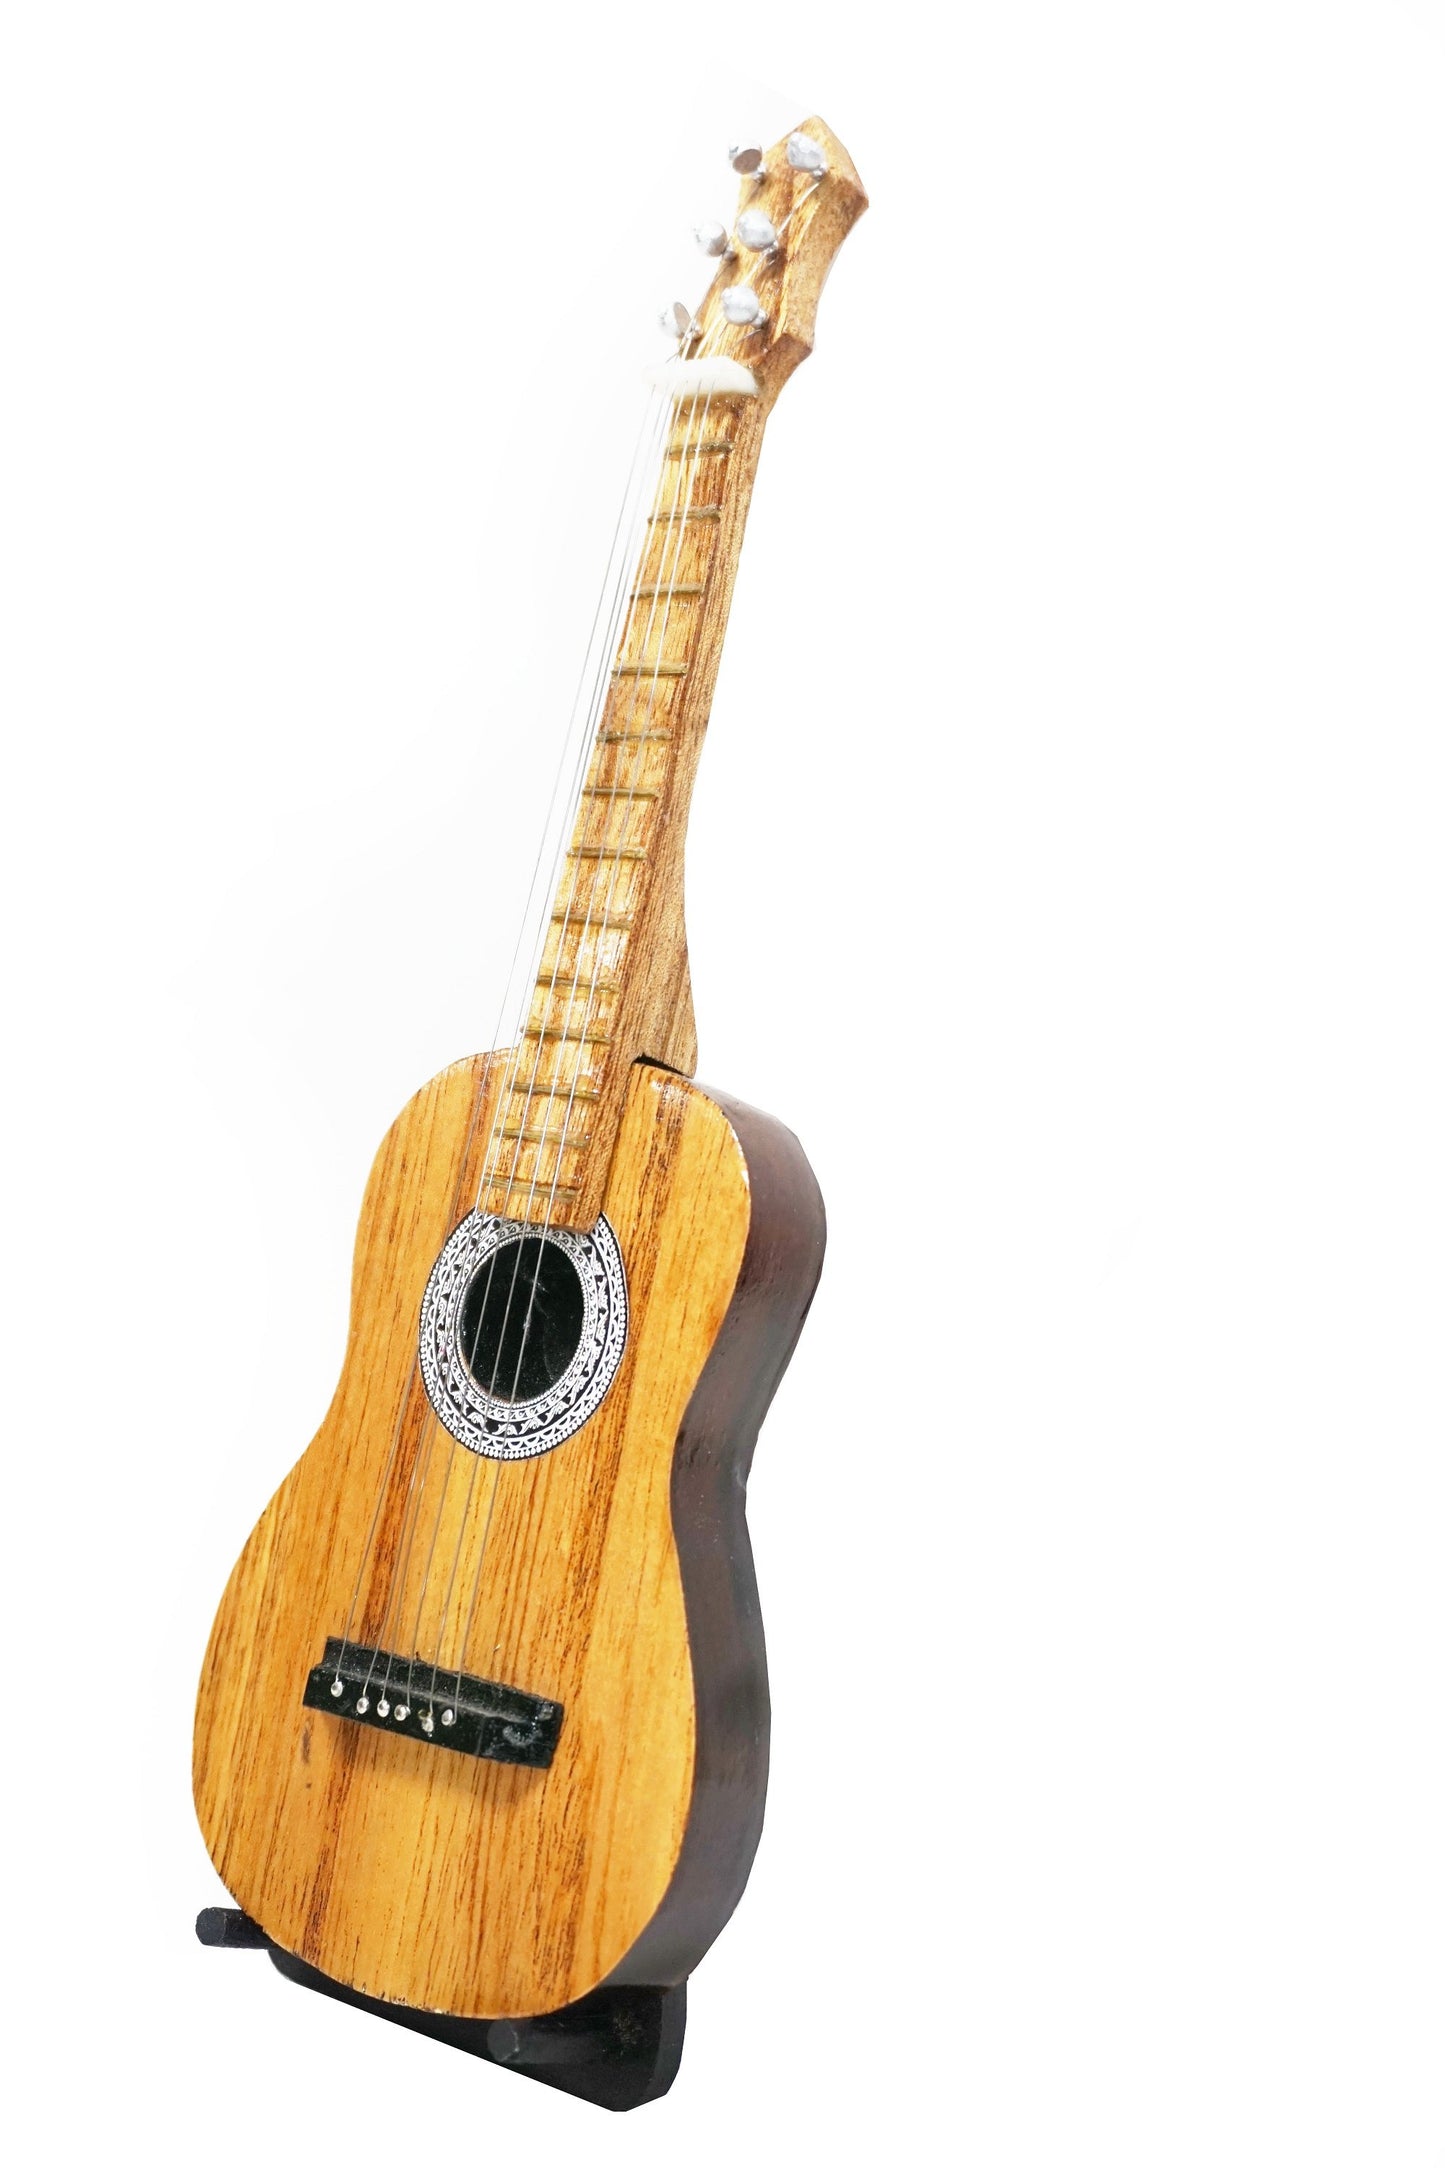 Nakshi Wooden Acoustic Guitar Handcrafted Miniature Musical Instrument Showpiece 9.75"x3.25"